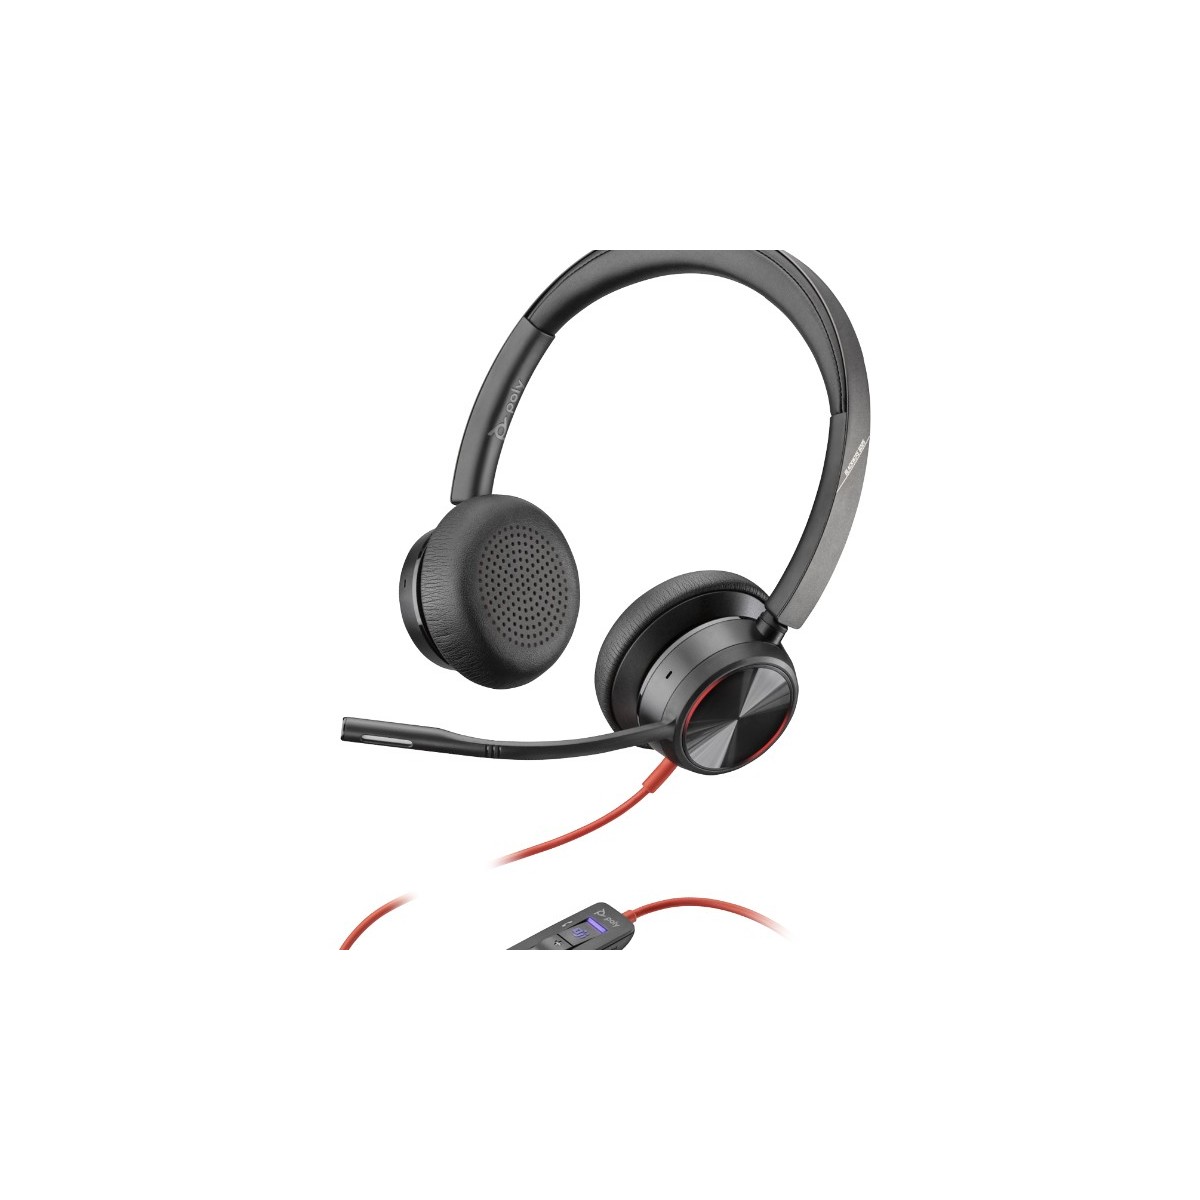 Poly Blackwire 8225 - Headphones - Head-band - Office/Call center - Black - Binaural - Volume +,Volume -